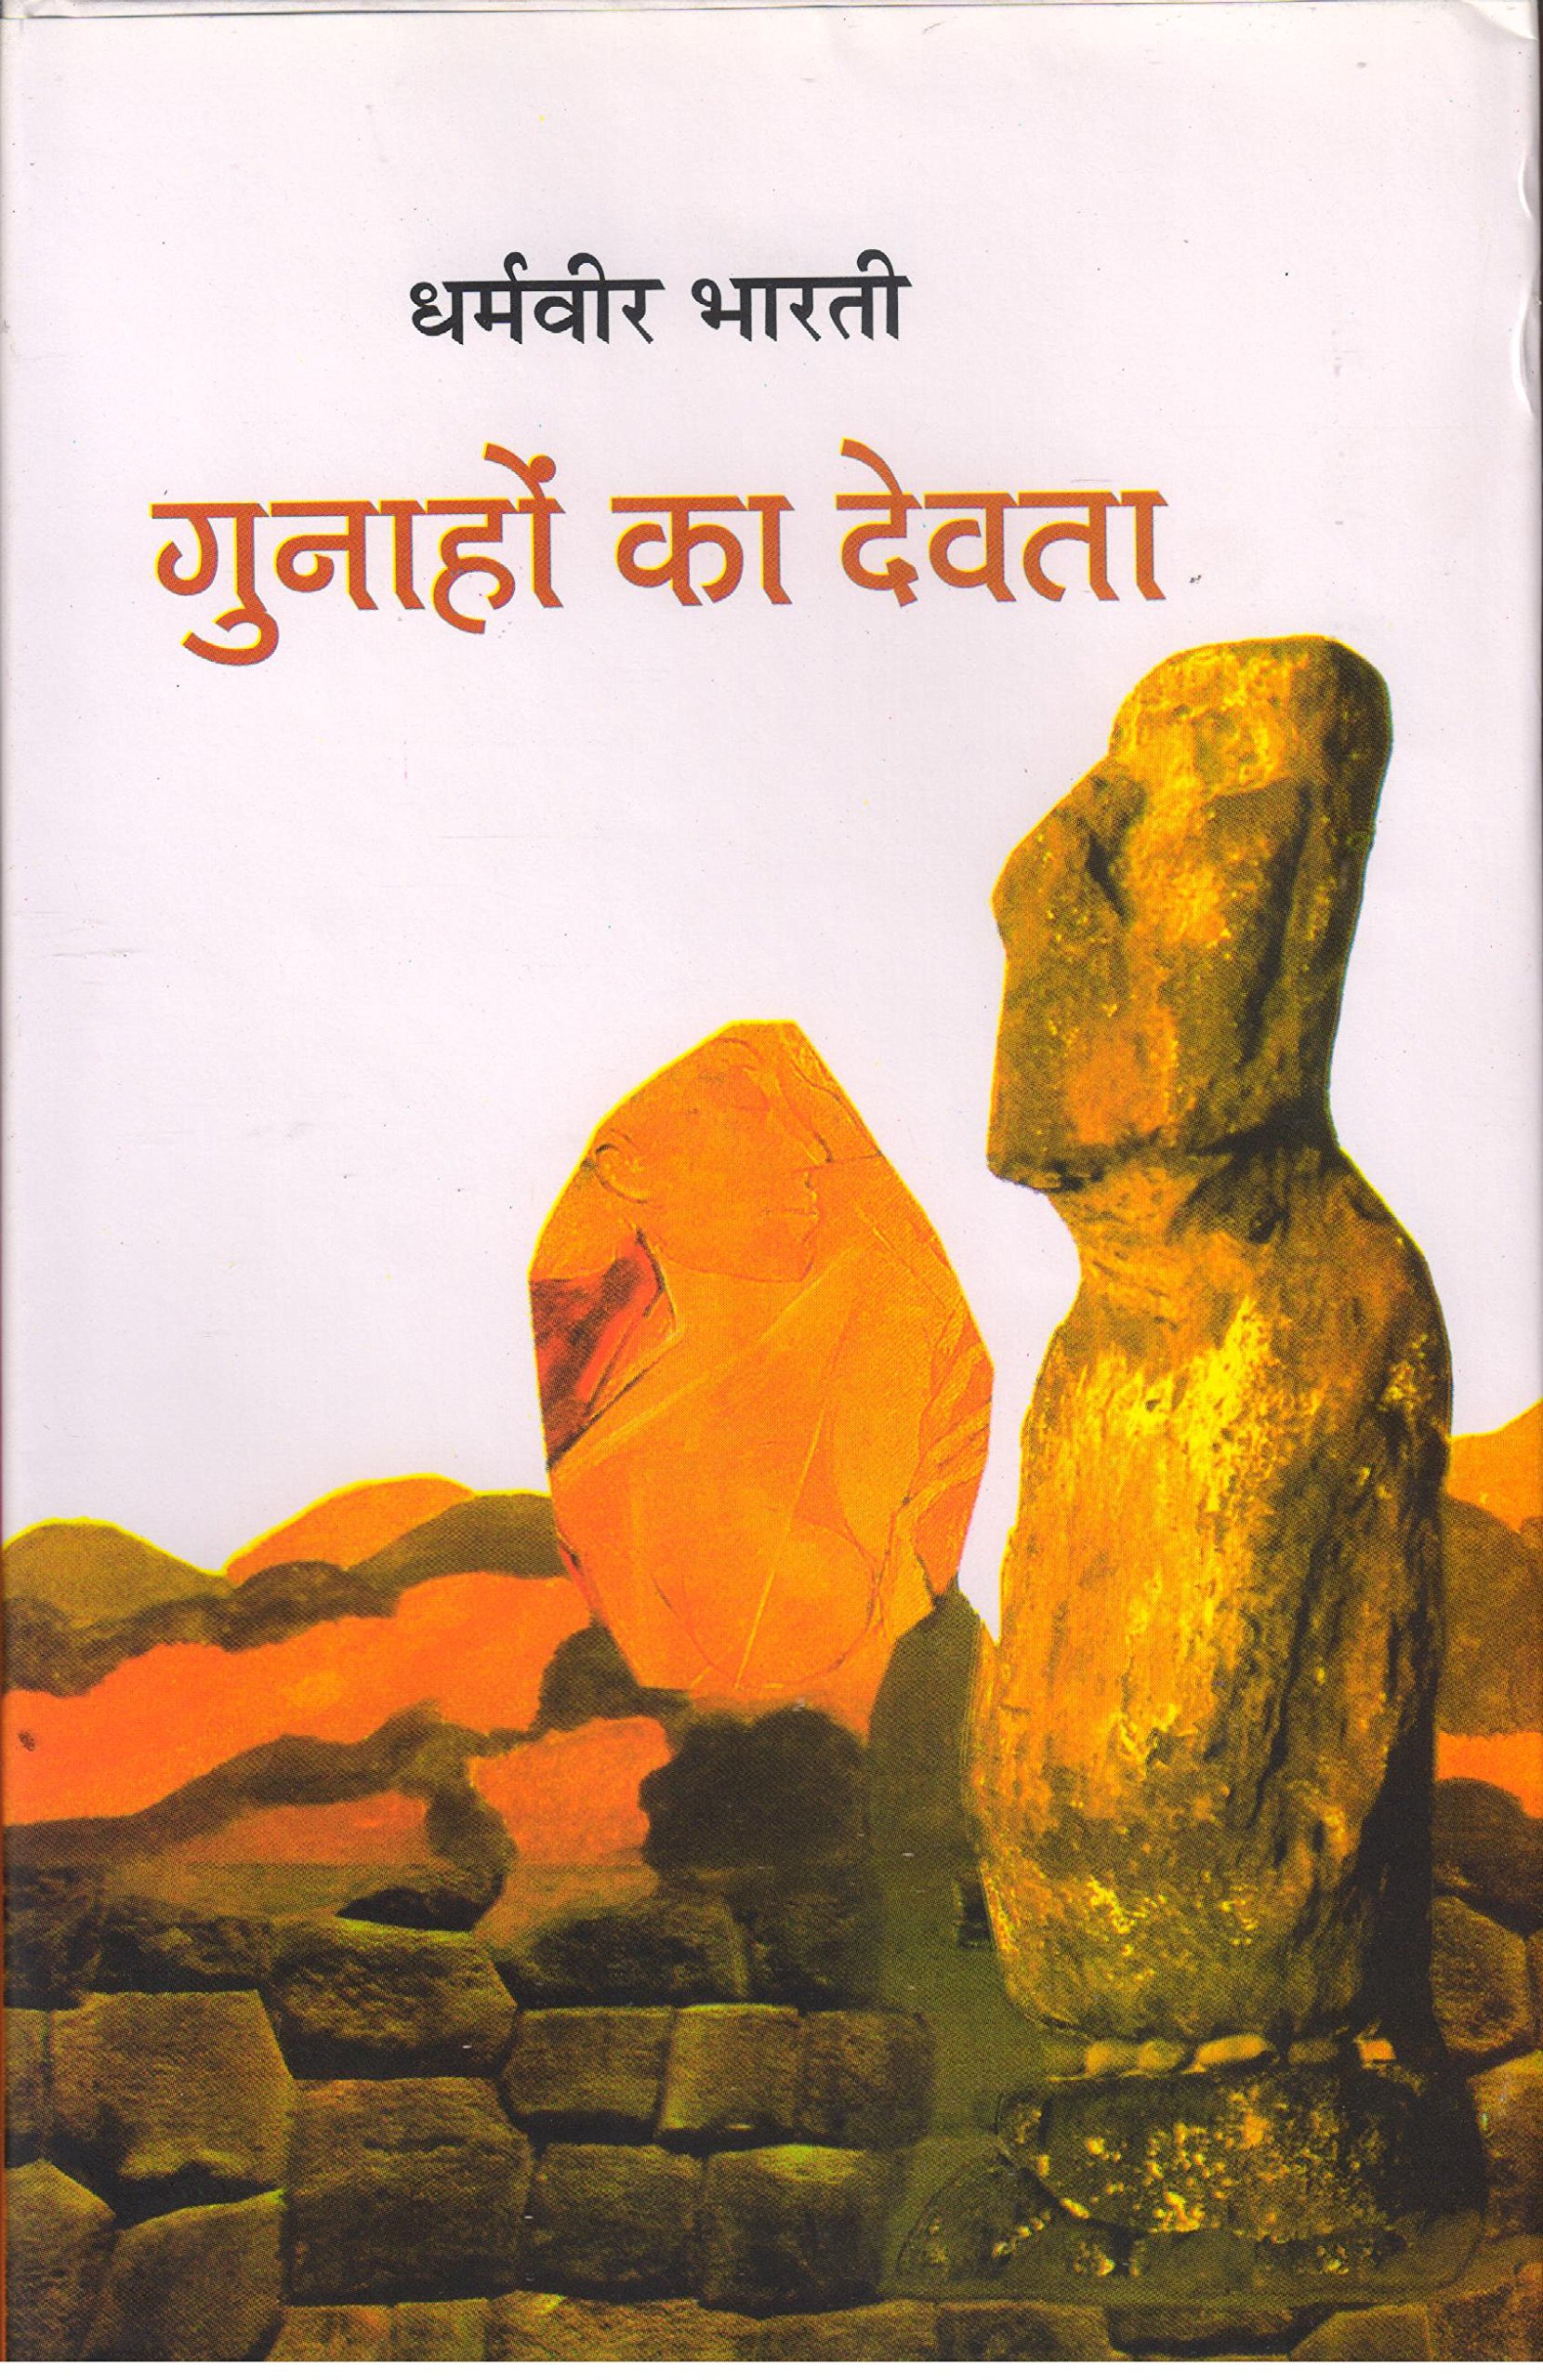 book review pdf in hindi